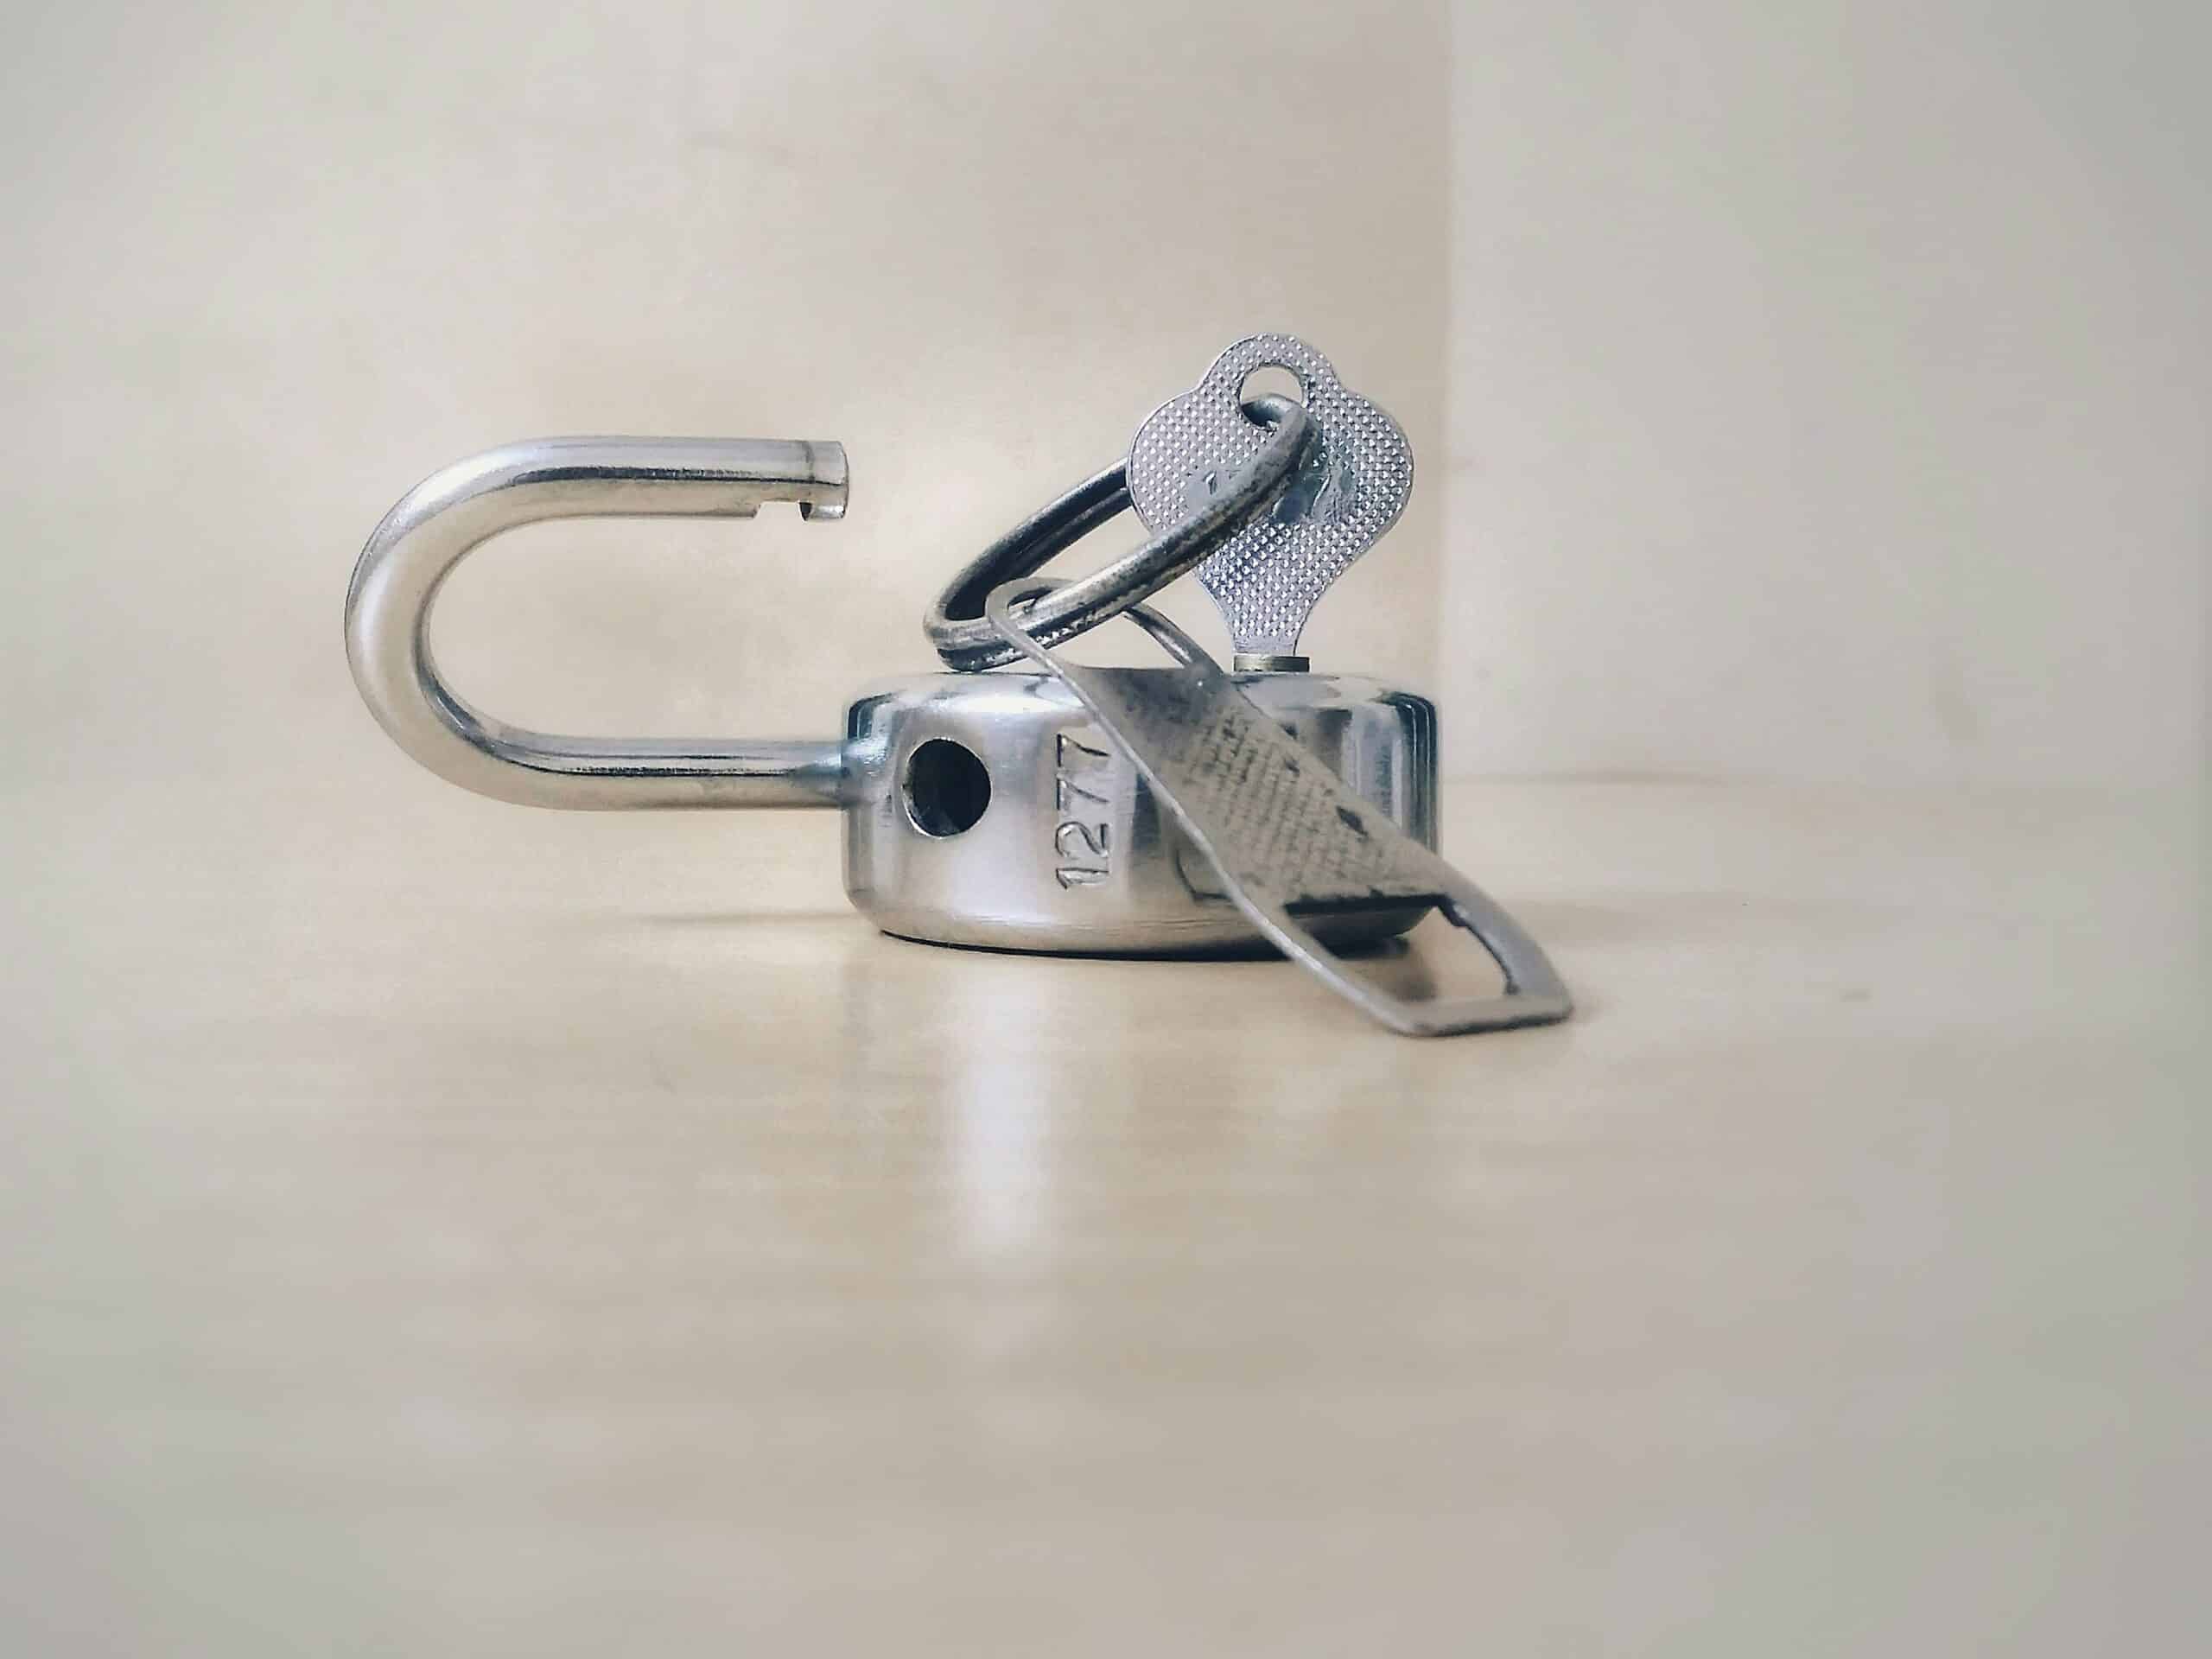 A metal silver lock getting unlocked